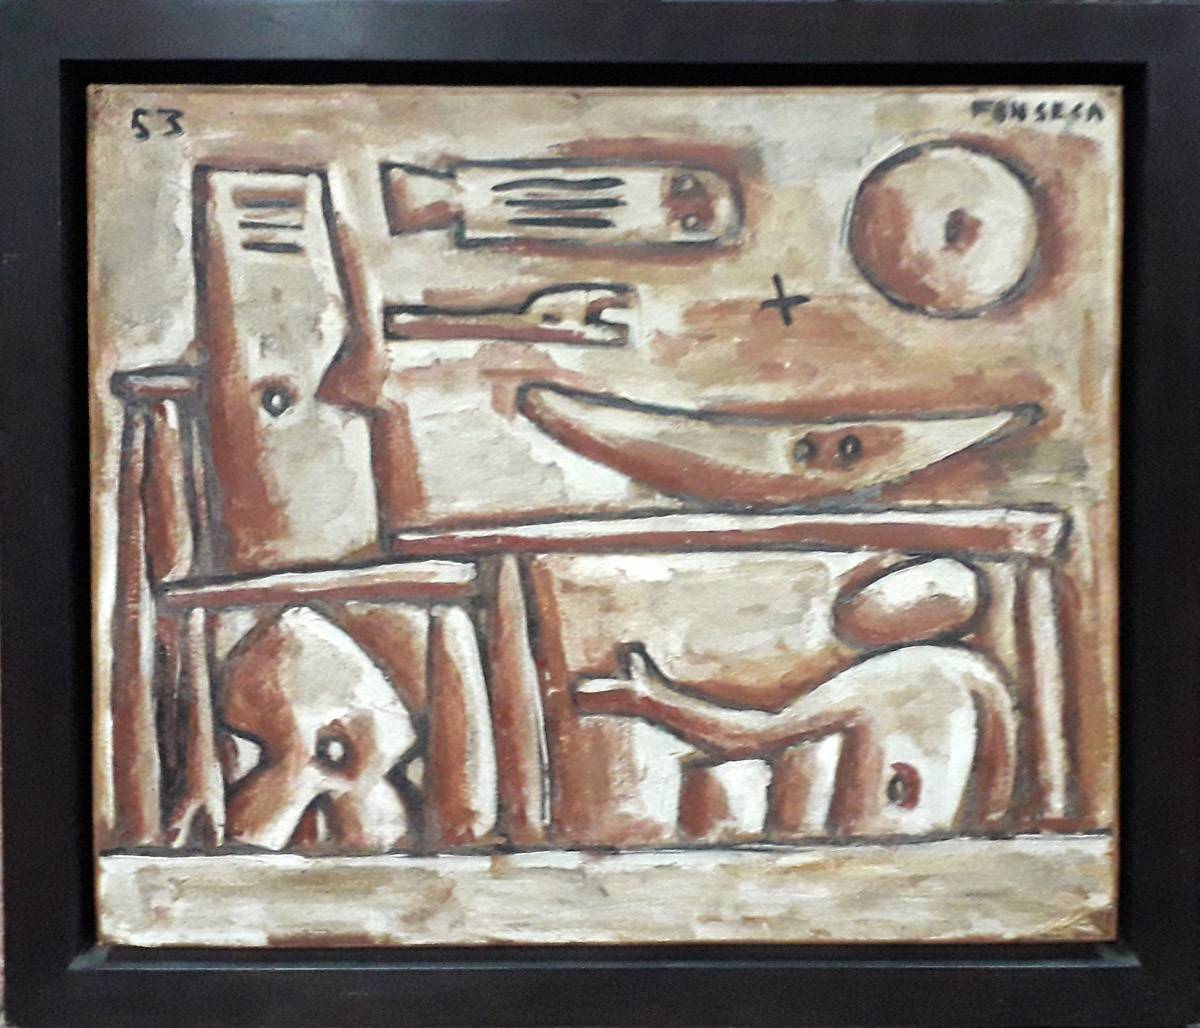 Trabajos escultóricos en terracota, 1953. Gonzalo Fonseca (1922-1997). Óleo sobre cartón.  42 x 46,3 cm. Nº inv. 6388.